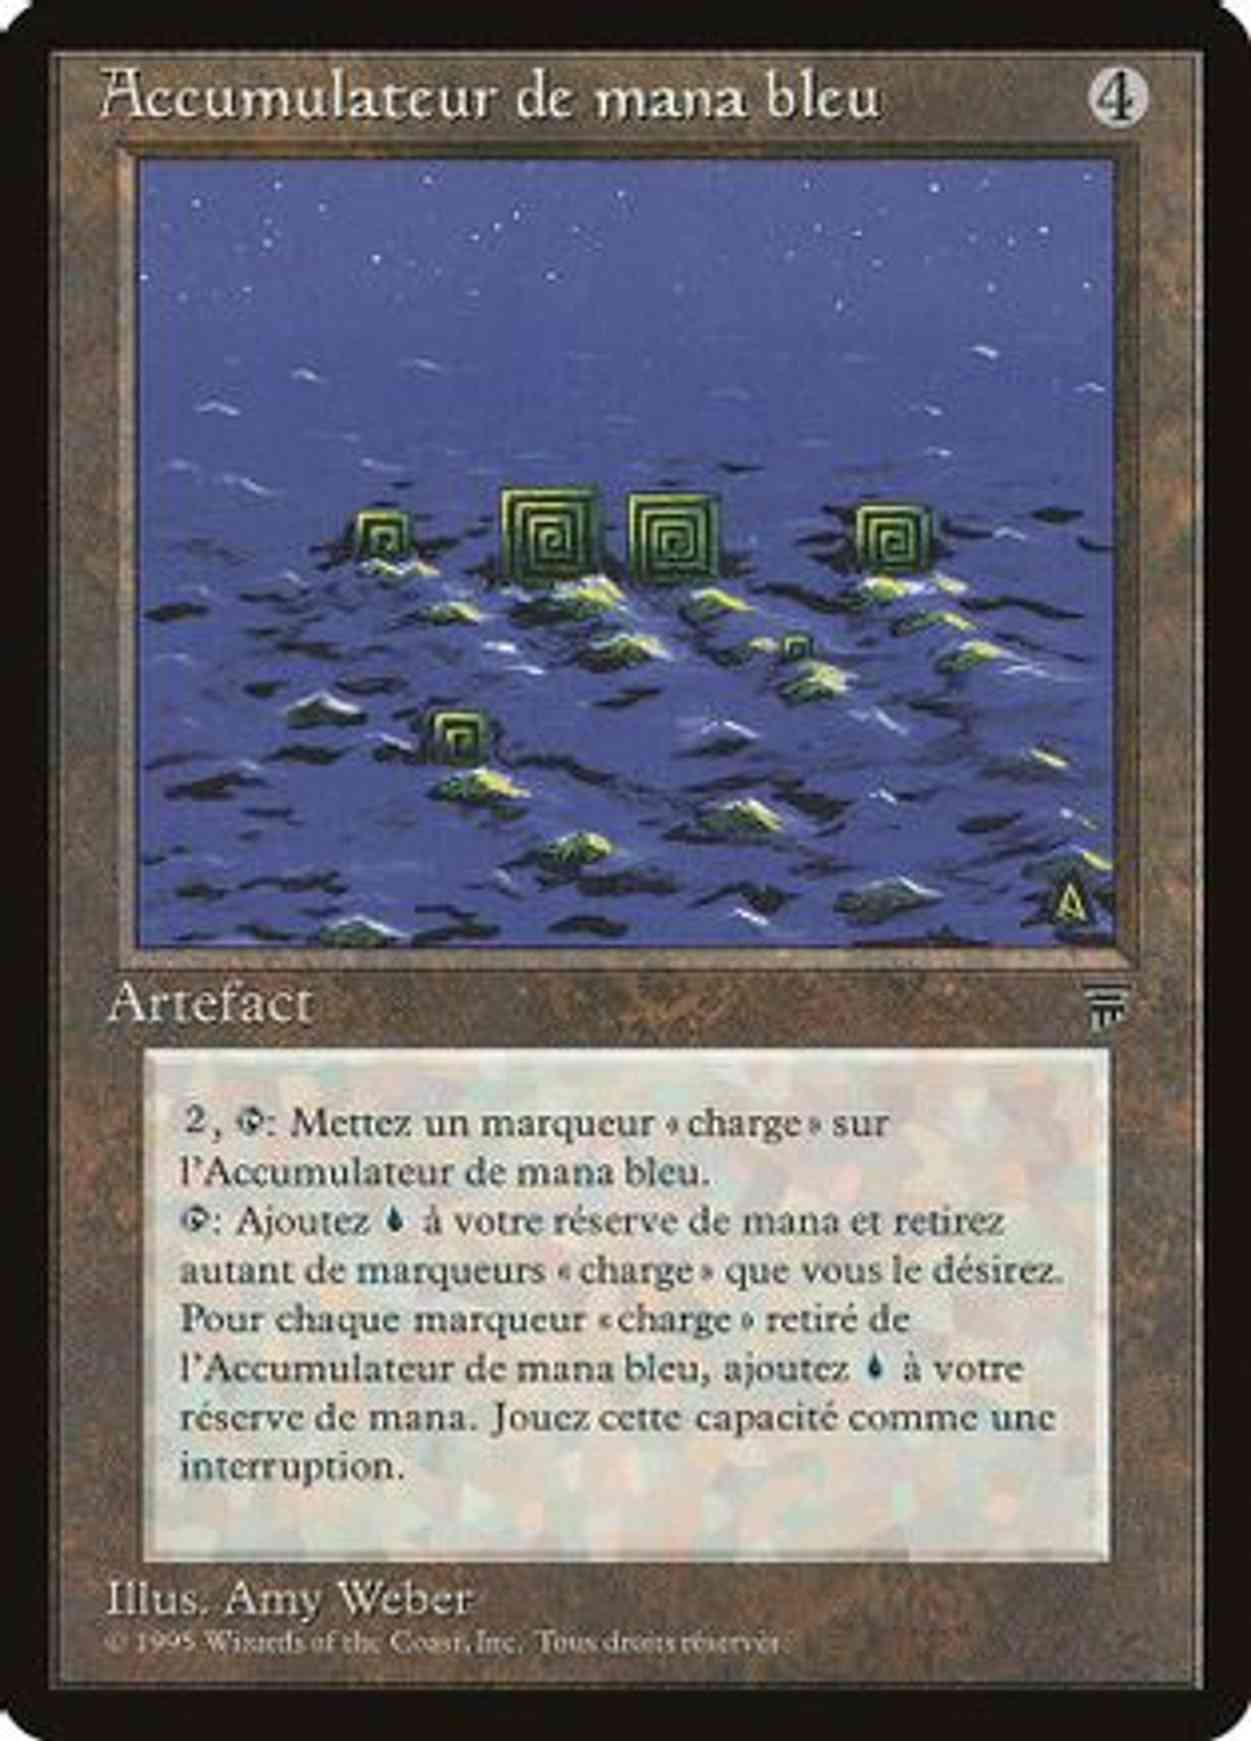 Blue Mana Battery (French) - "Accumulateur de mana bleu" magic card front